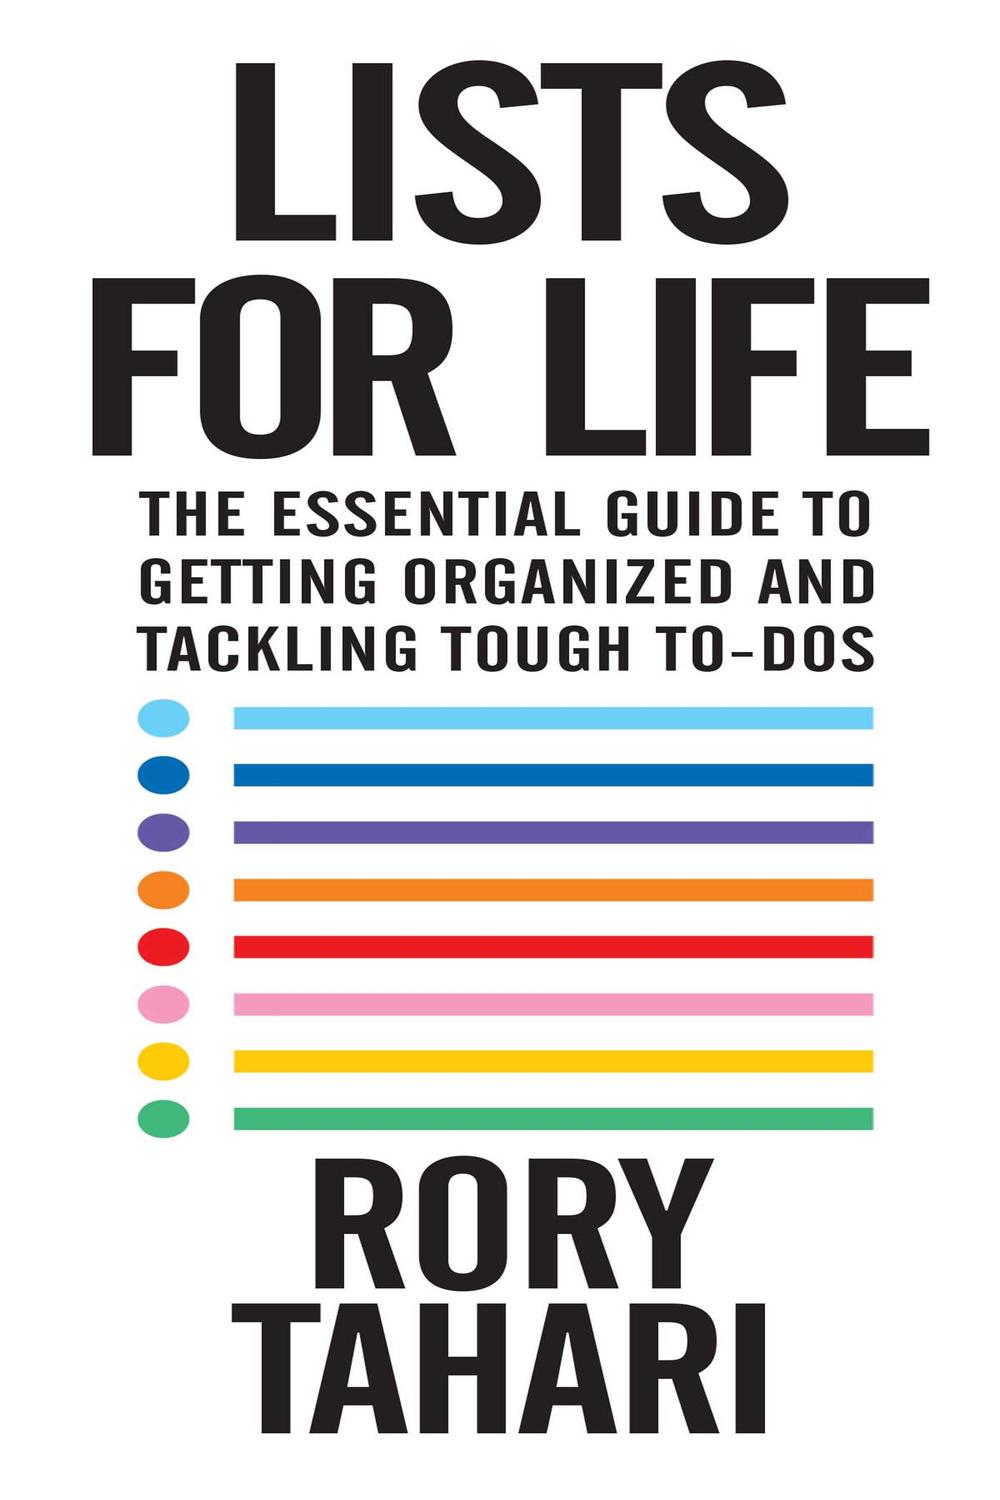 Lists for Life - Rory Tahari